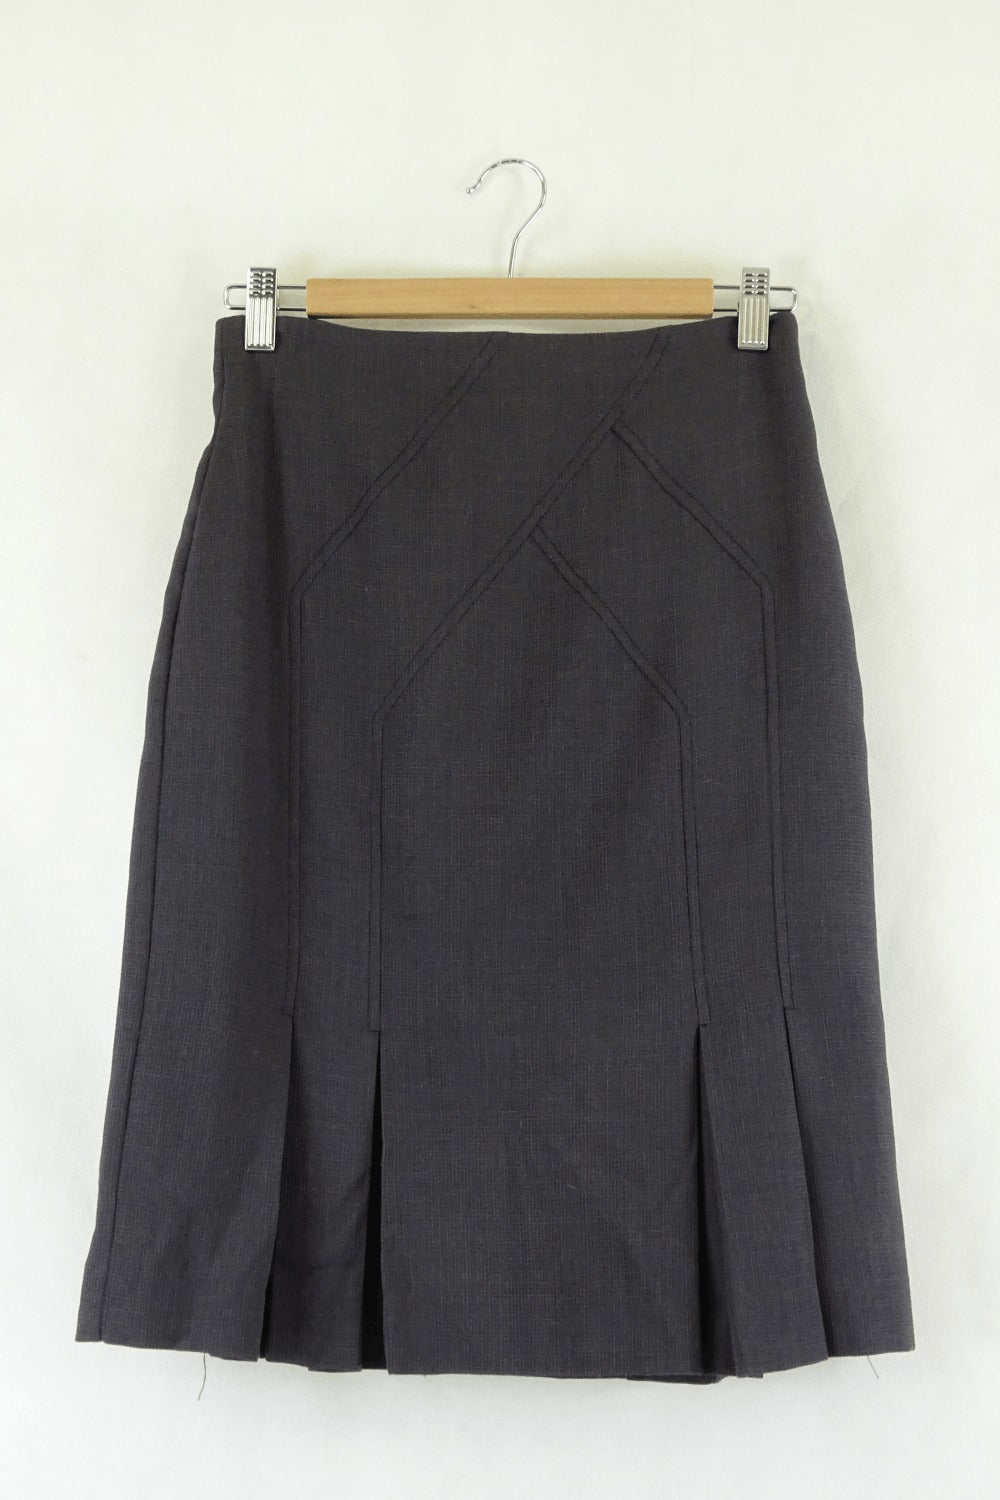 Jigsaw Grey Box Pleat Skirt 6